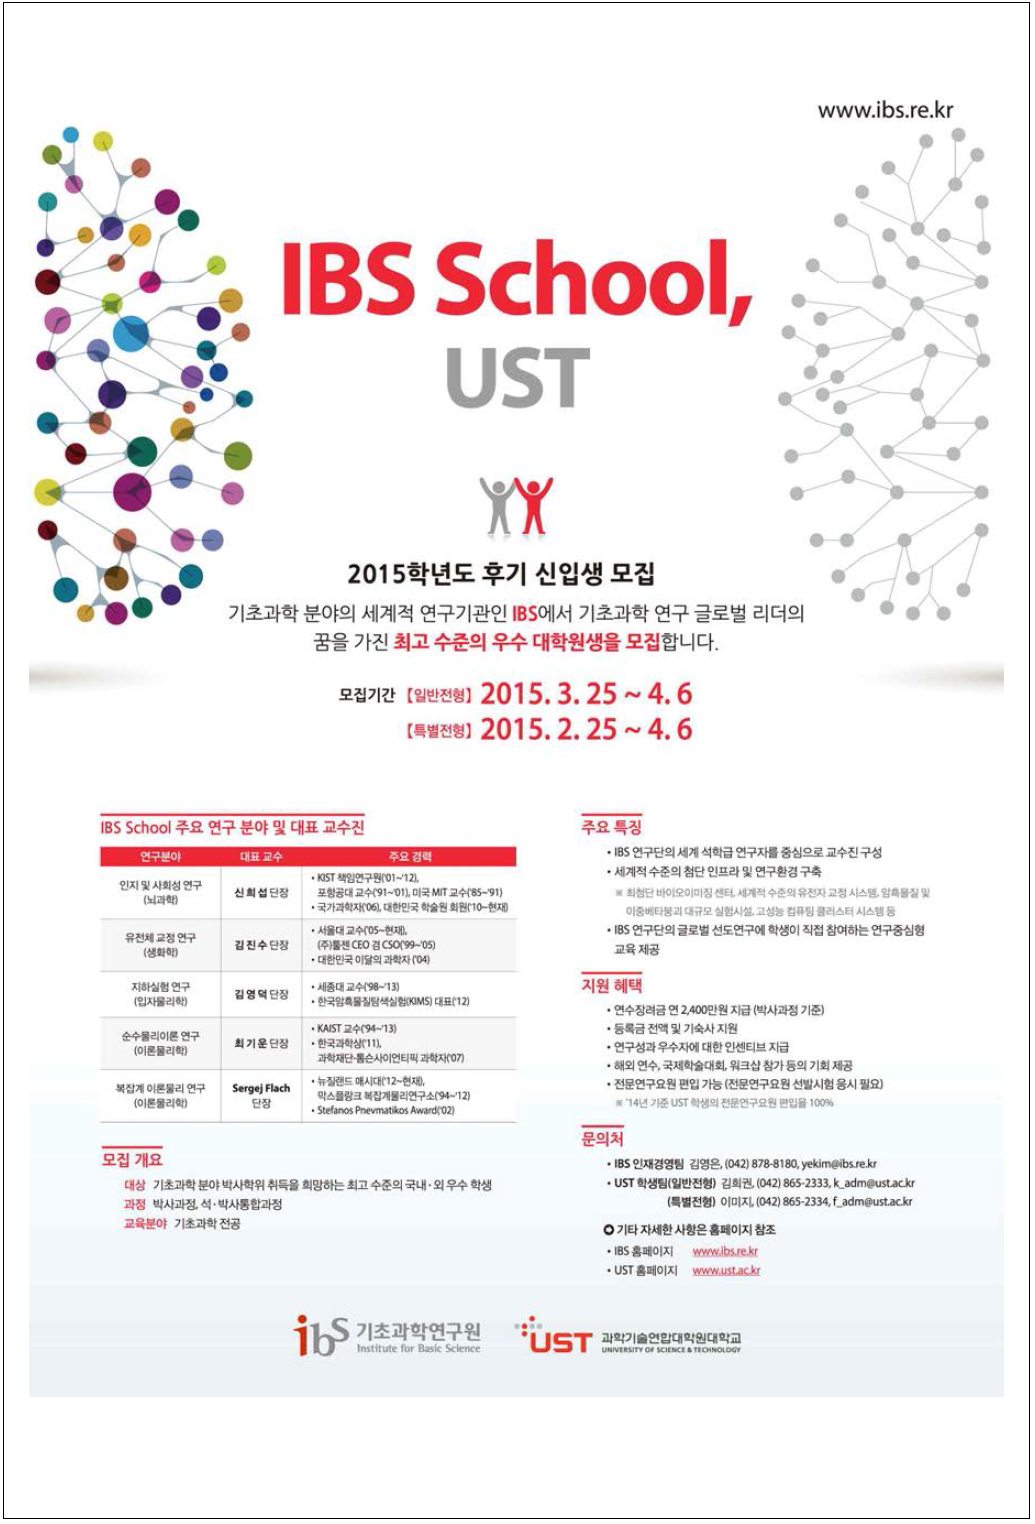 IBS School, UST 2015 후기 신입생 모집 포스터형 광고(국문)